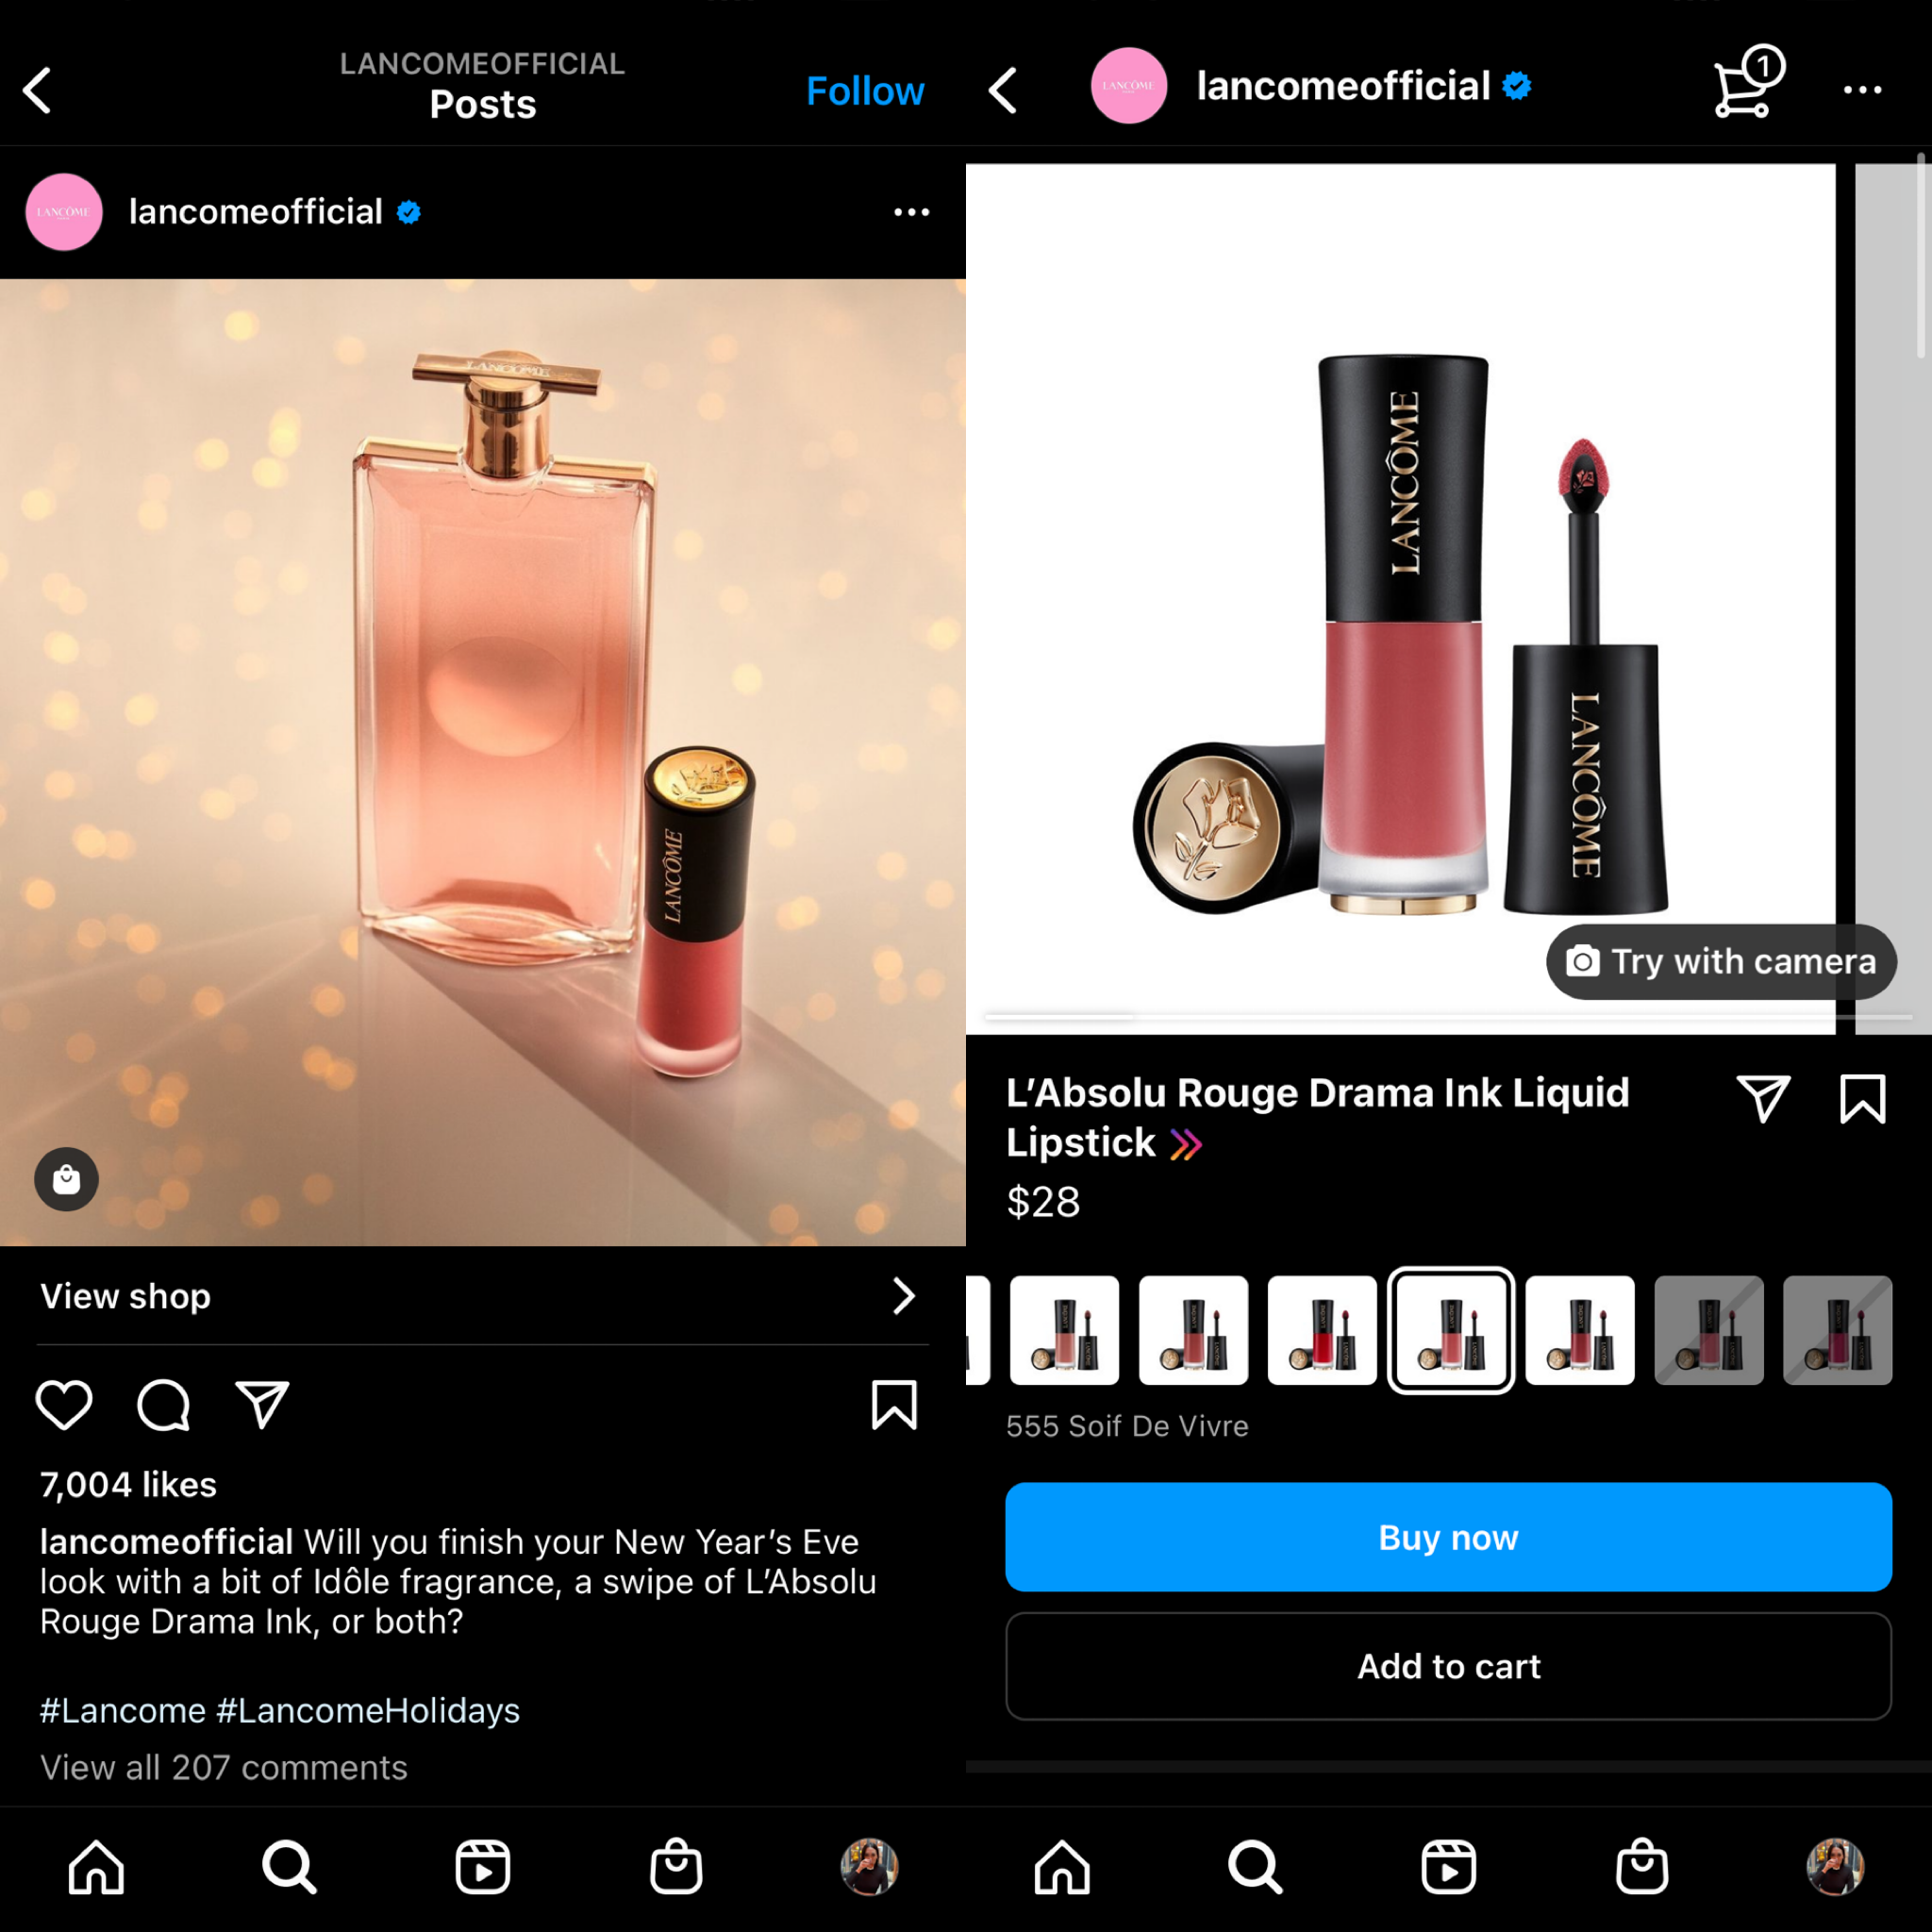 Screenshots of Instagram Shopping